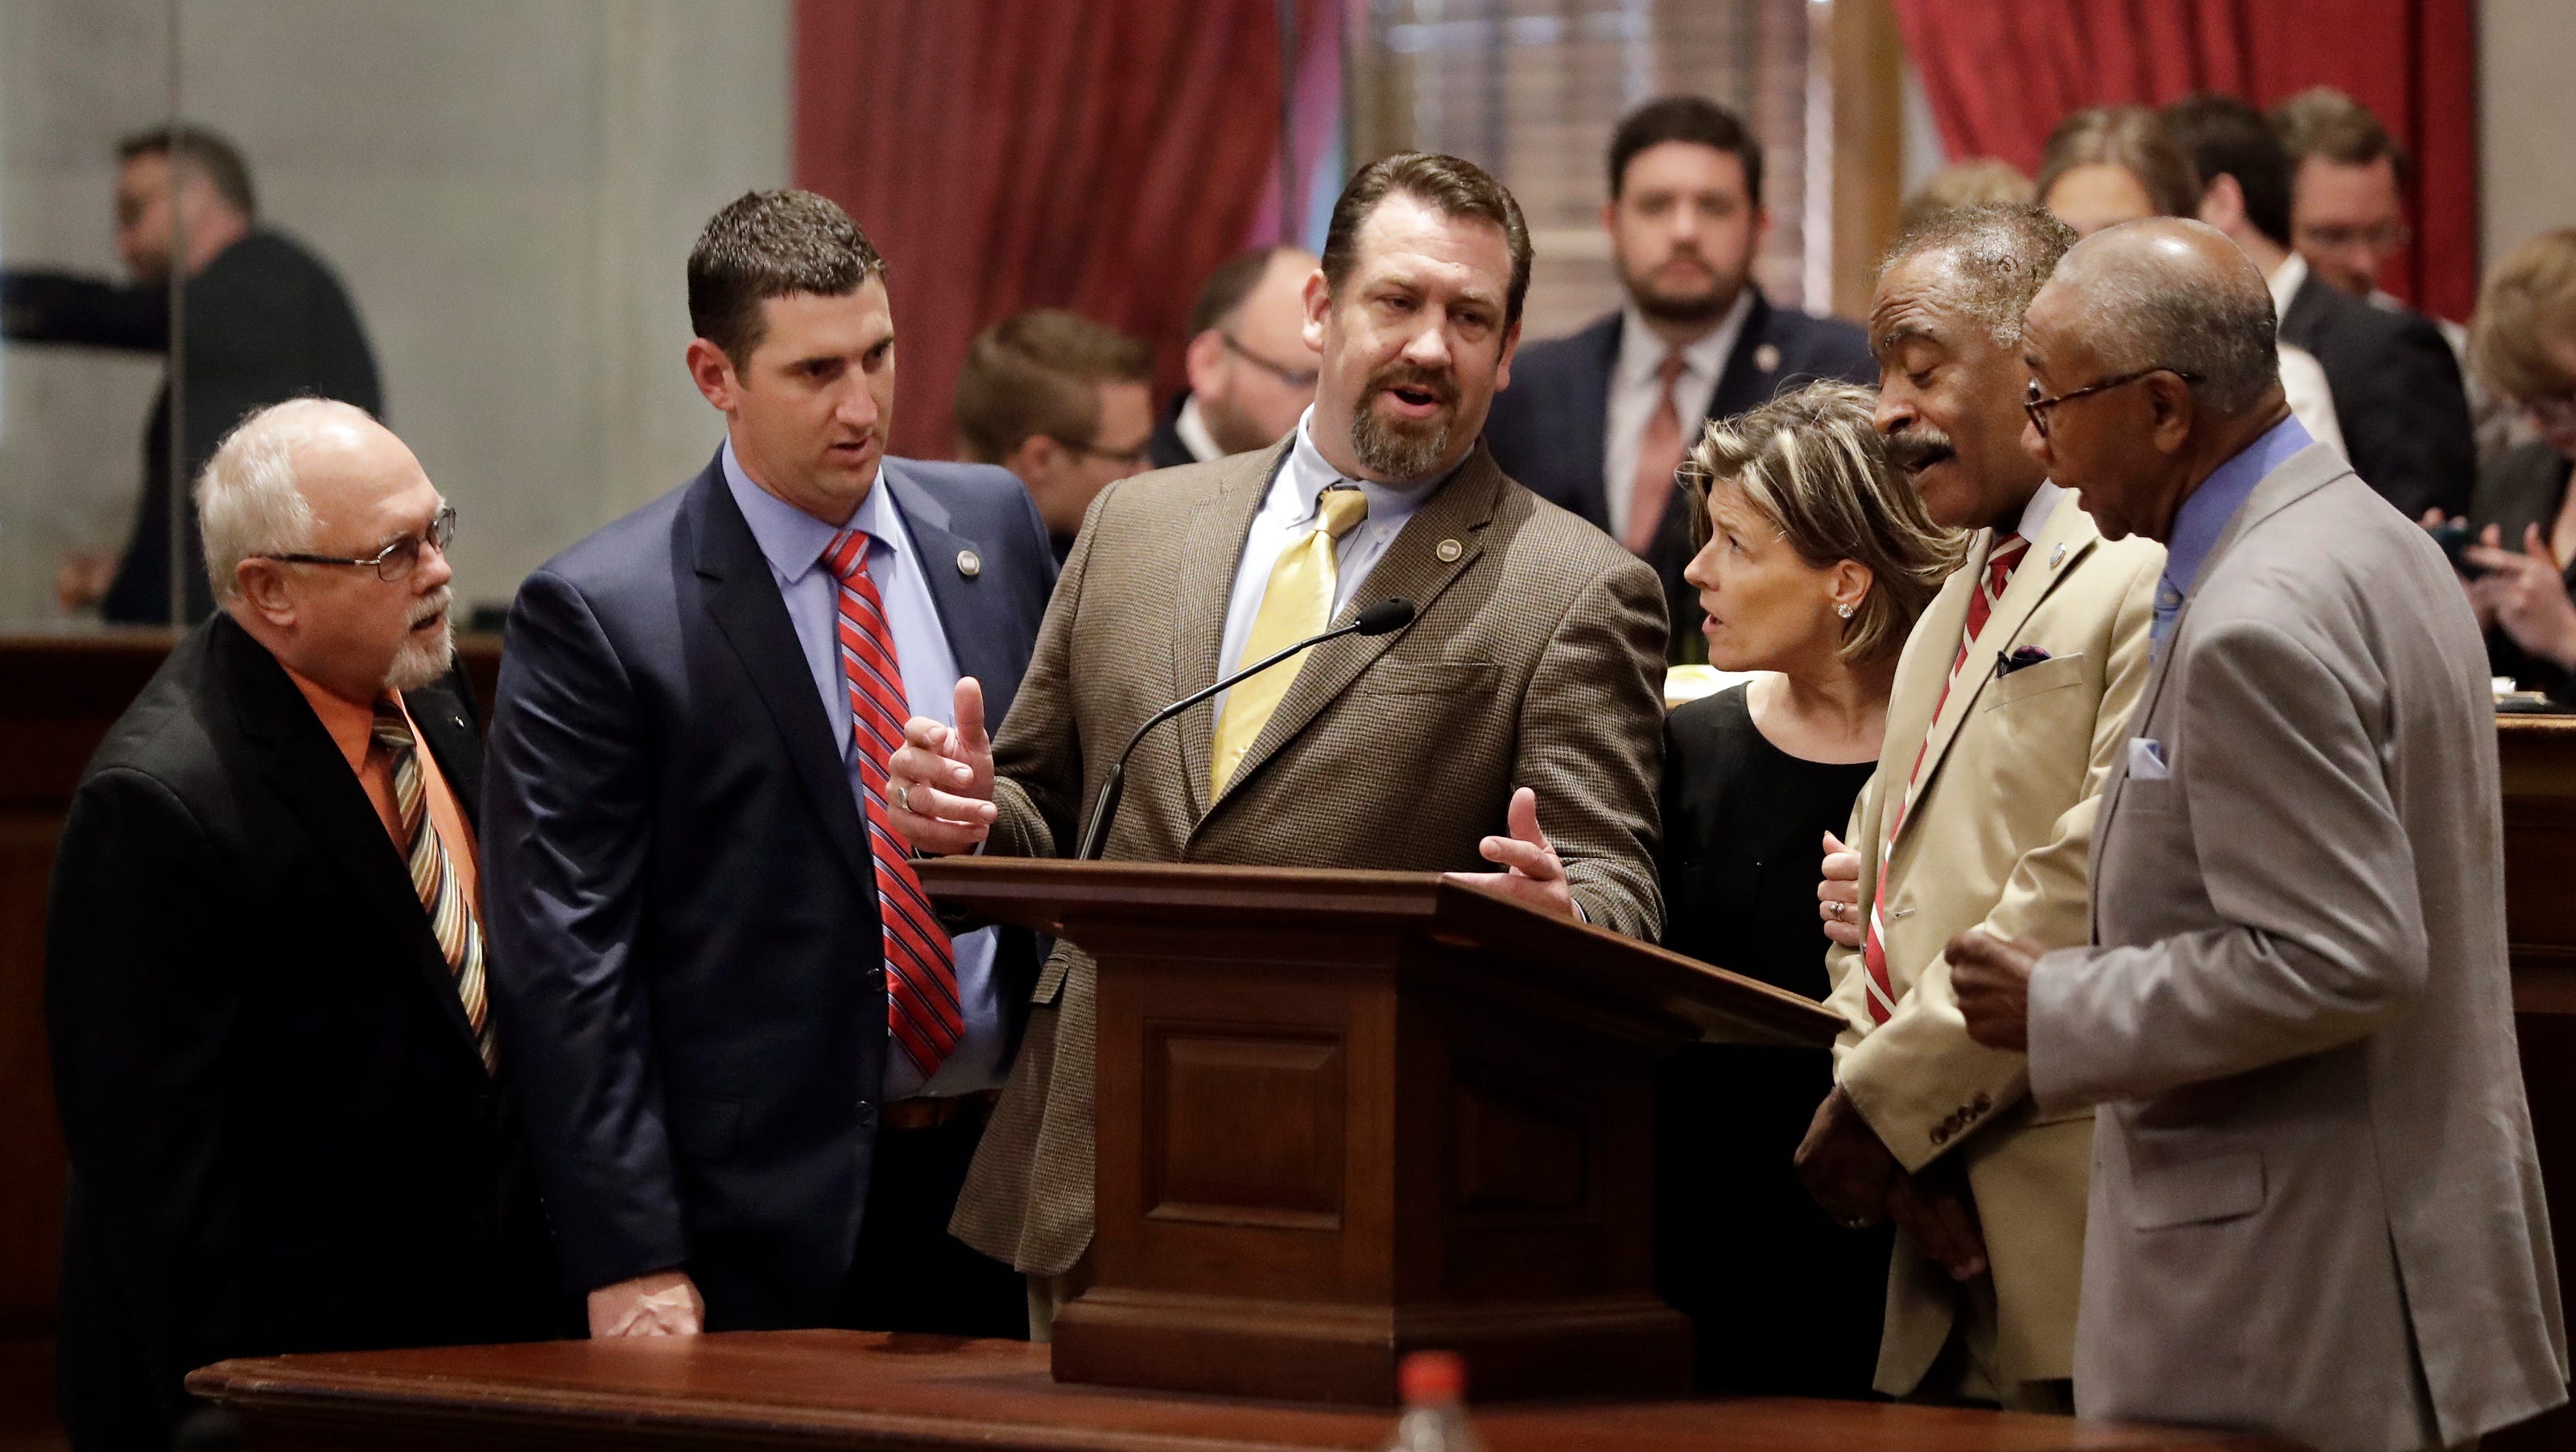 Tennessee Legislature Chaos Democratic Walkout Mark Final Hours Of Legislative Session